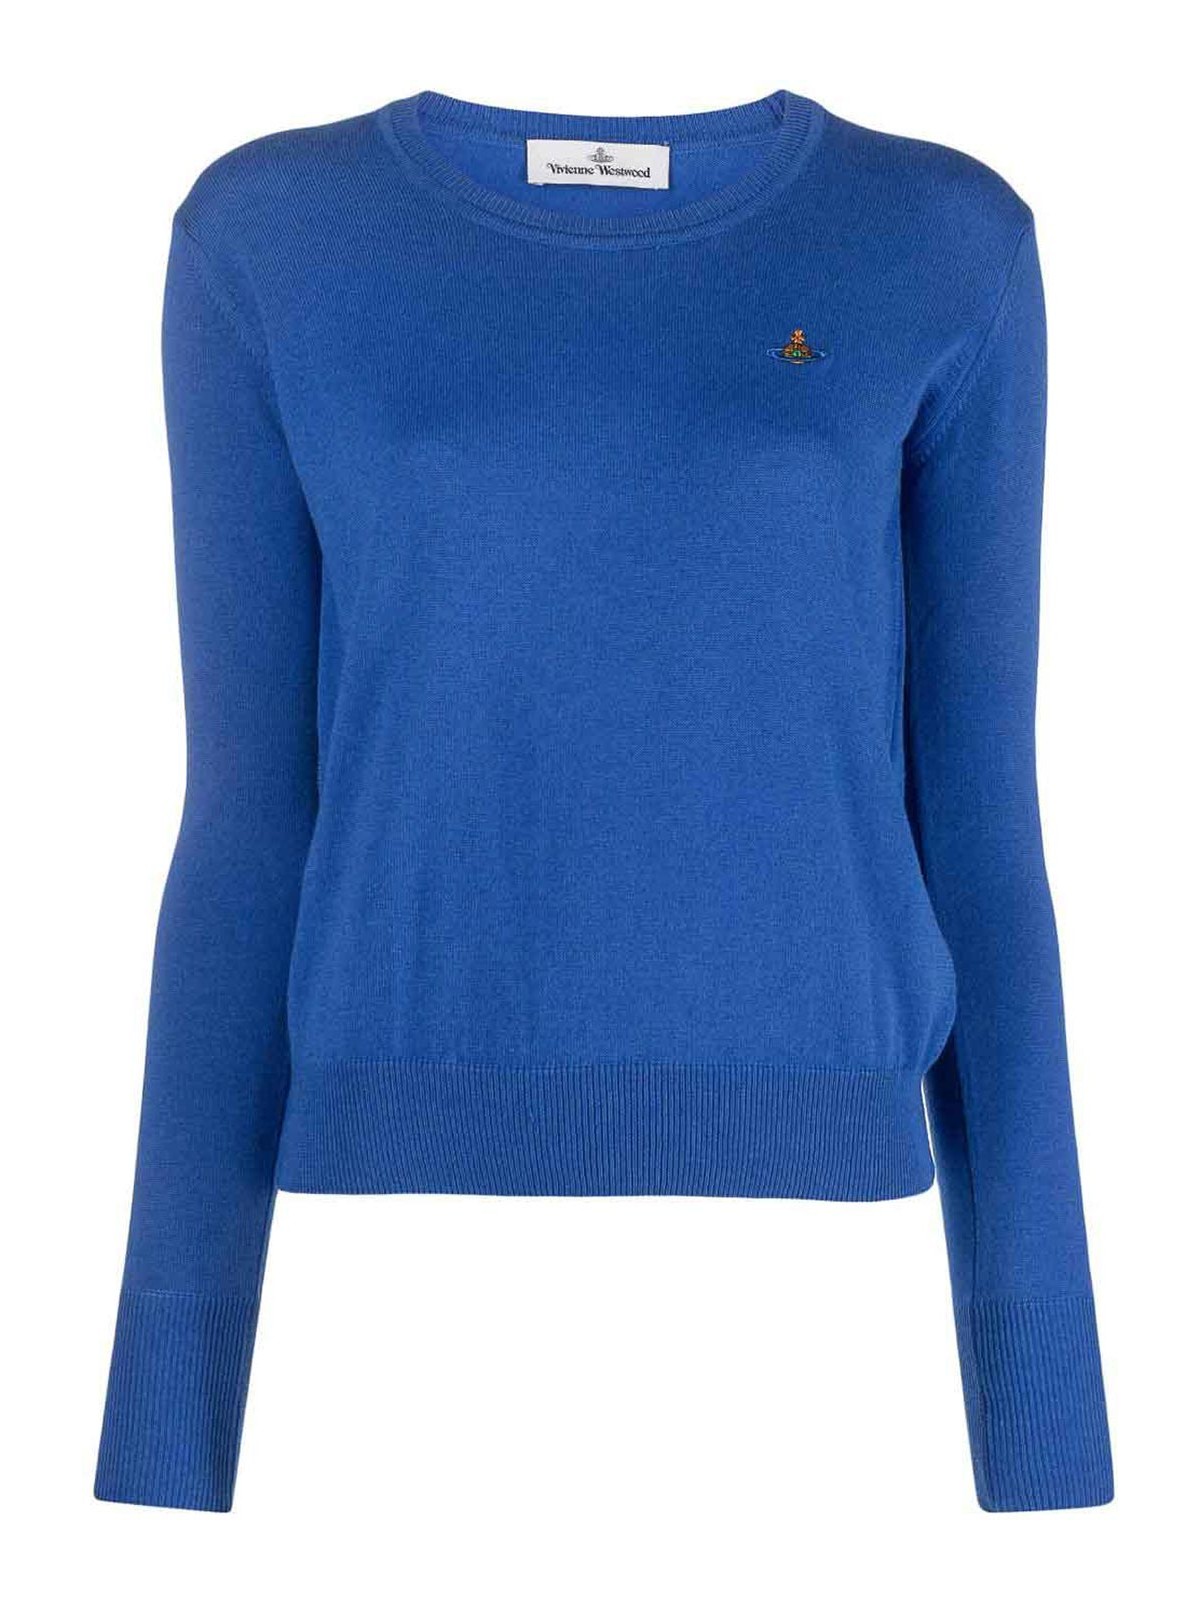 Vivienne Westwood Orb Logo Sweater In Blue